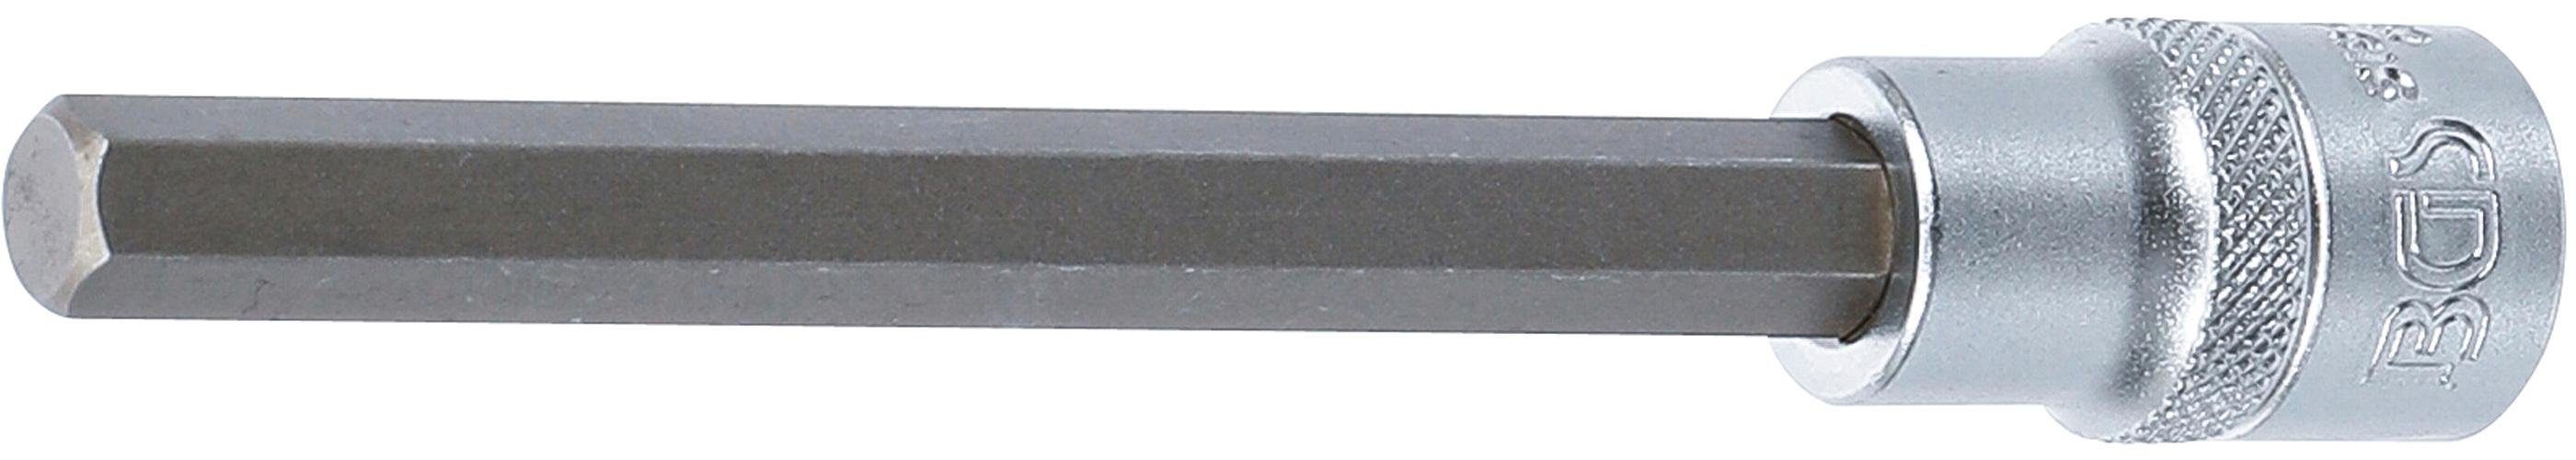 BGS technic Sechskant-Bit Bit-Einsatz, Länge 140 mm, Antrieb Innenvierkant 12,5 mm (1/2), Innensechskant 10 mm